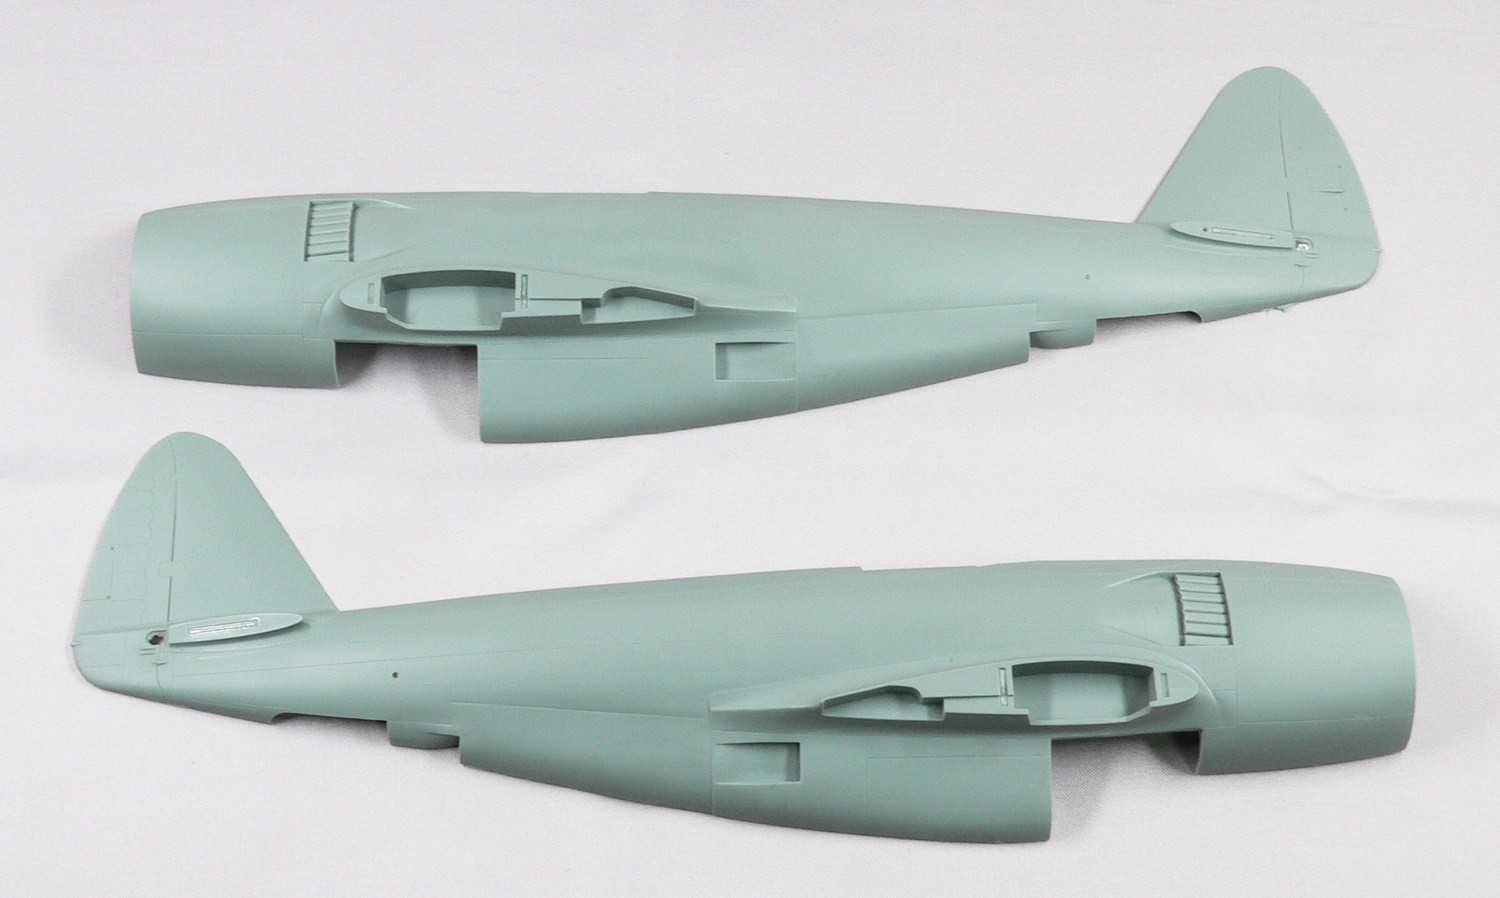 Halberd Models XP-72 Ultrabolt 1/32 Body